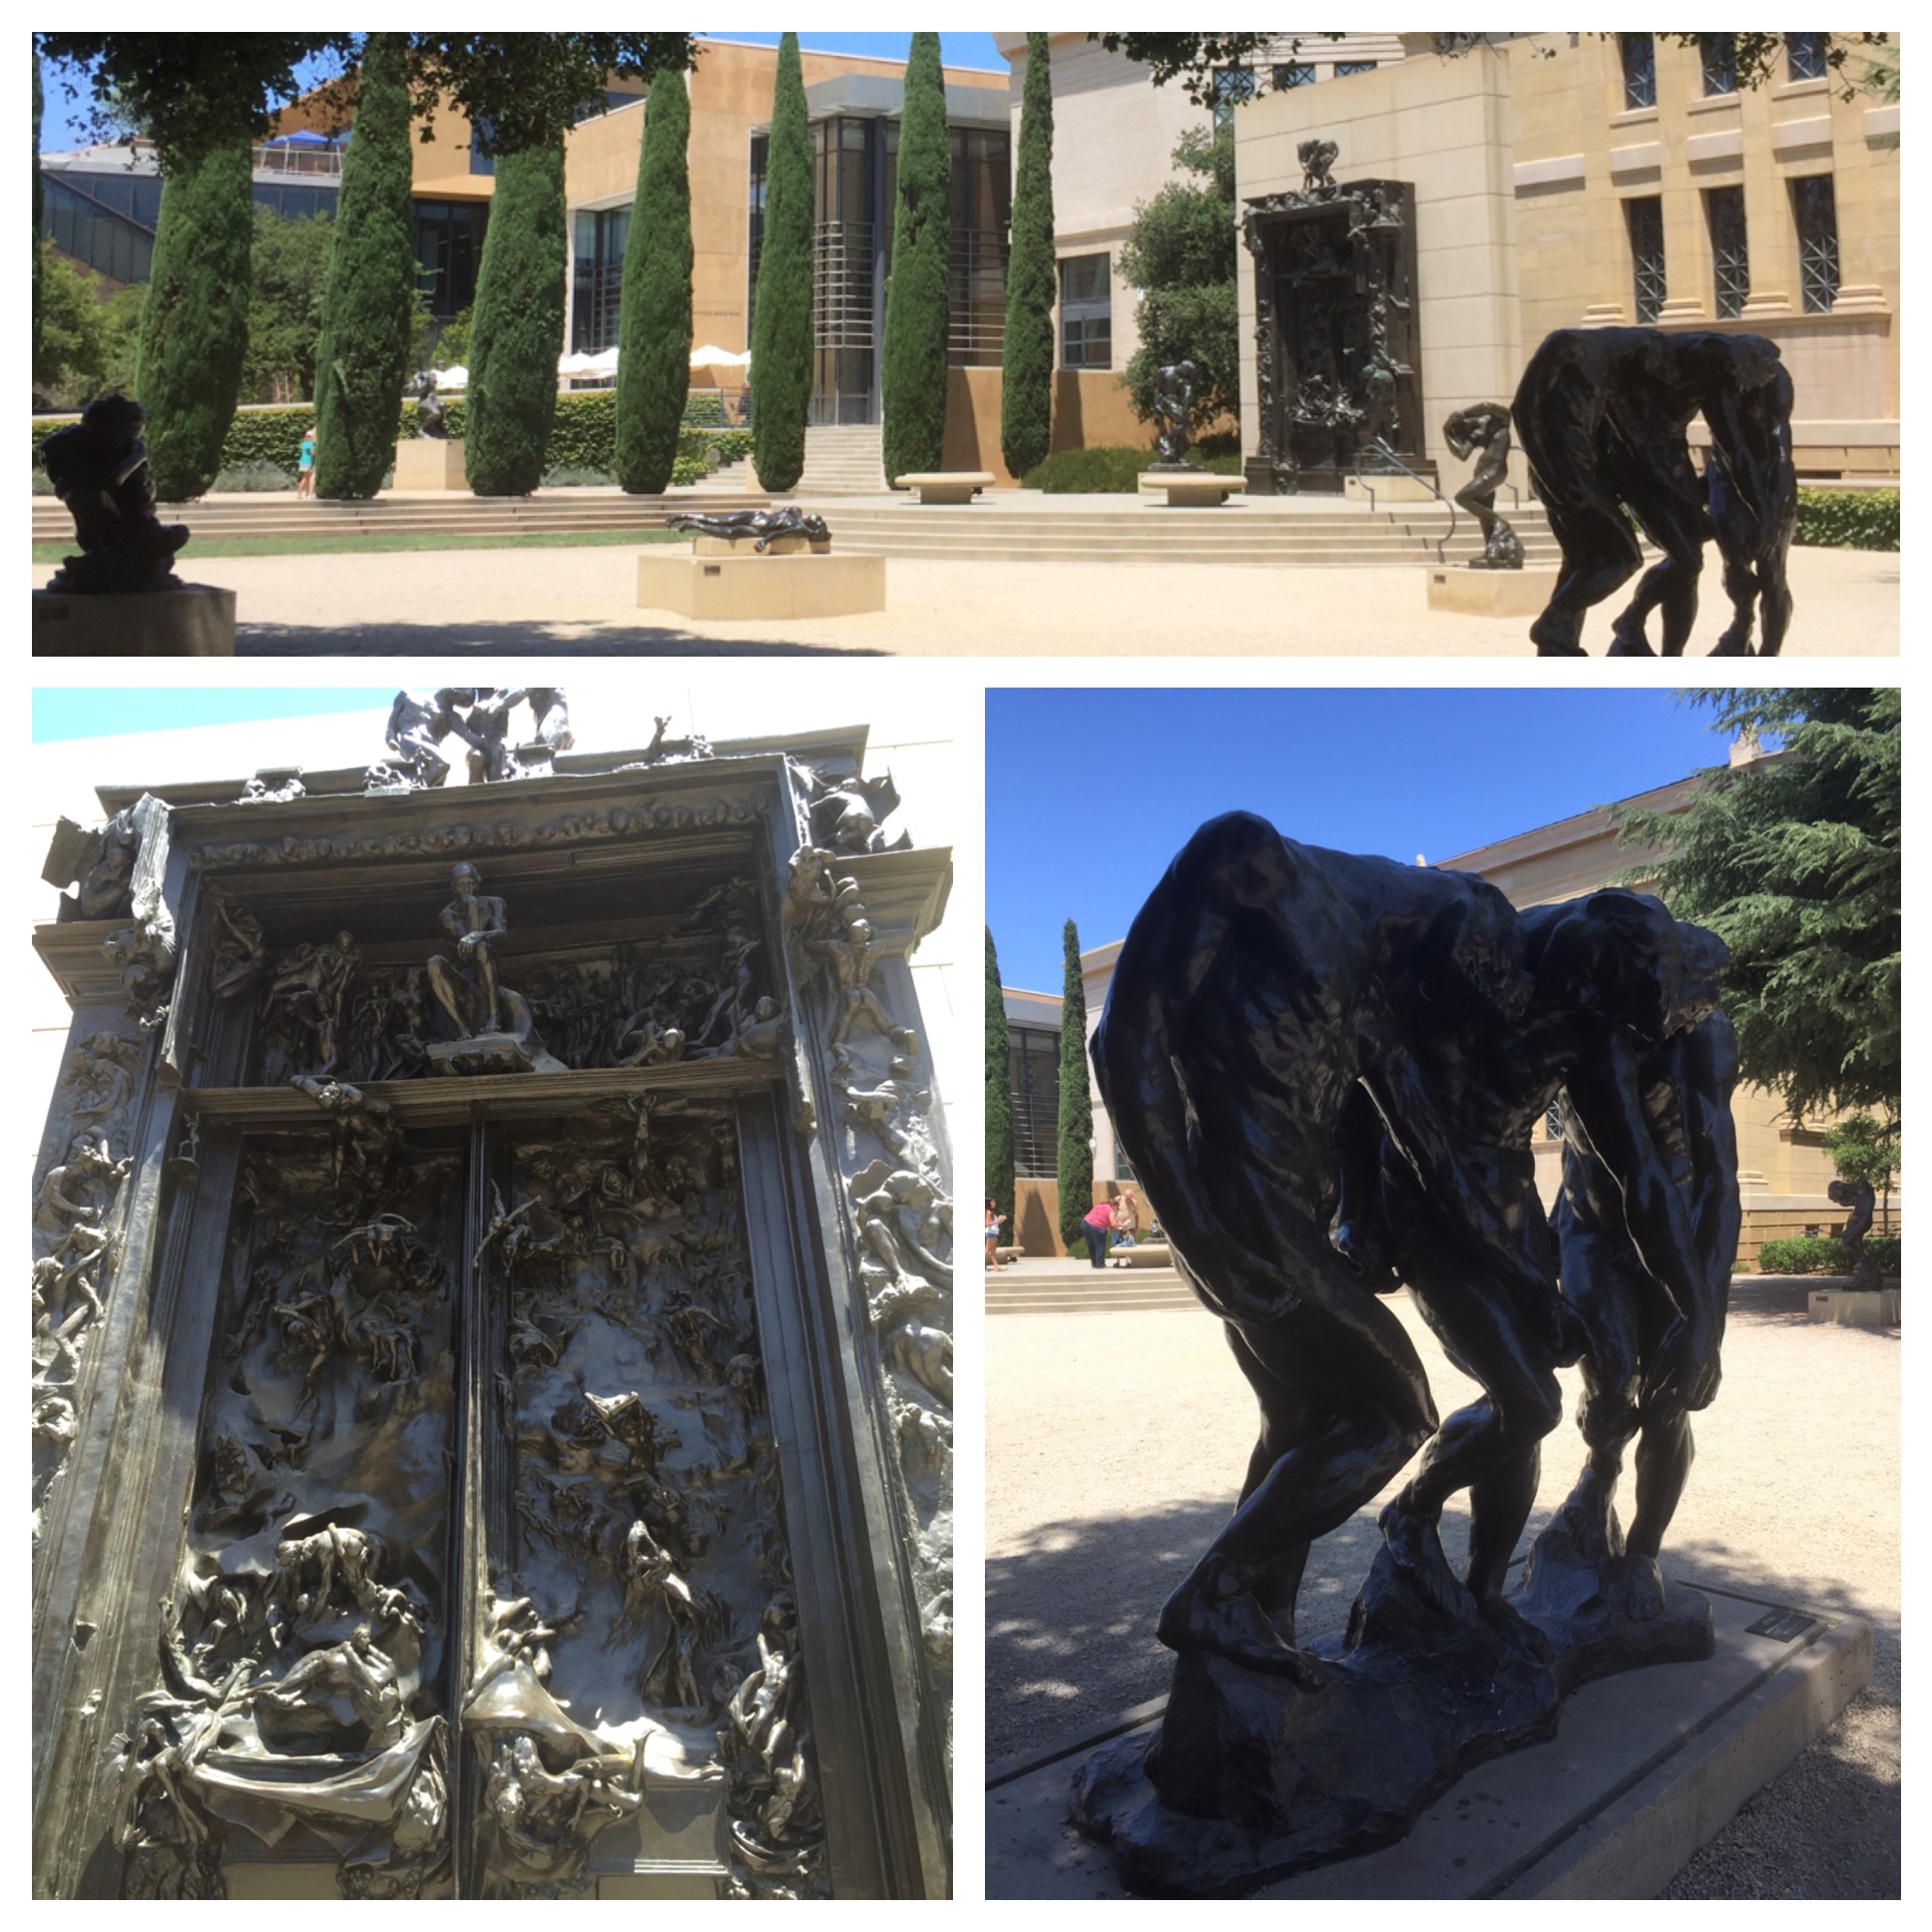 Jardim com as esculturas de Rodin